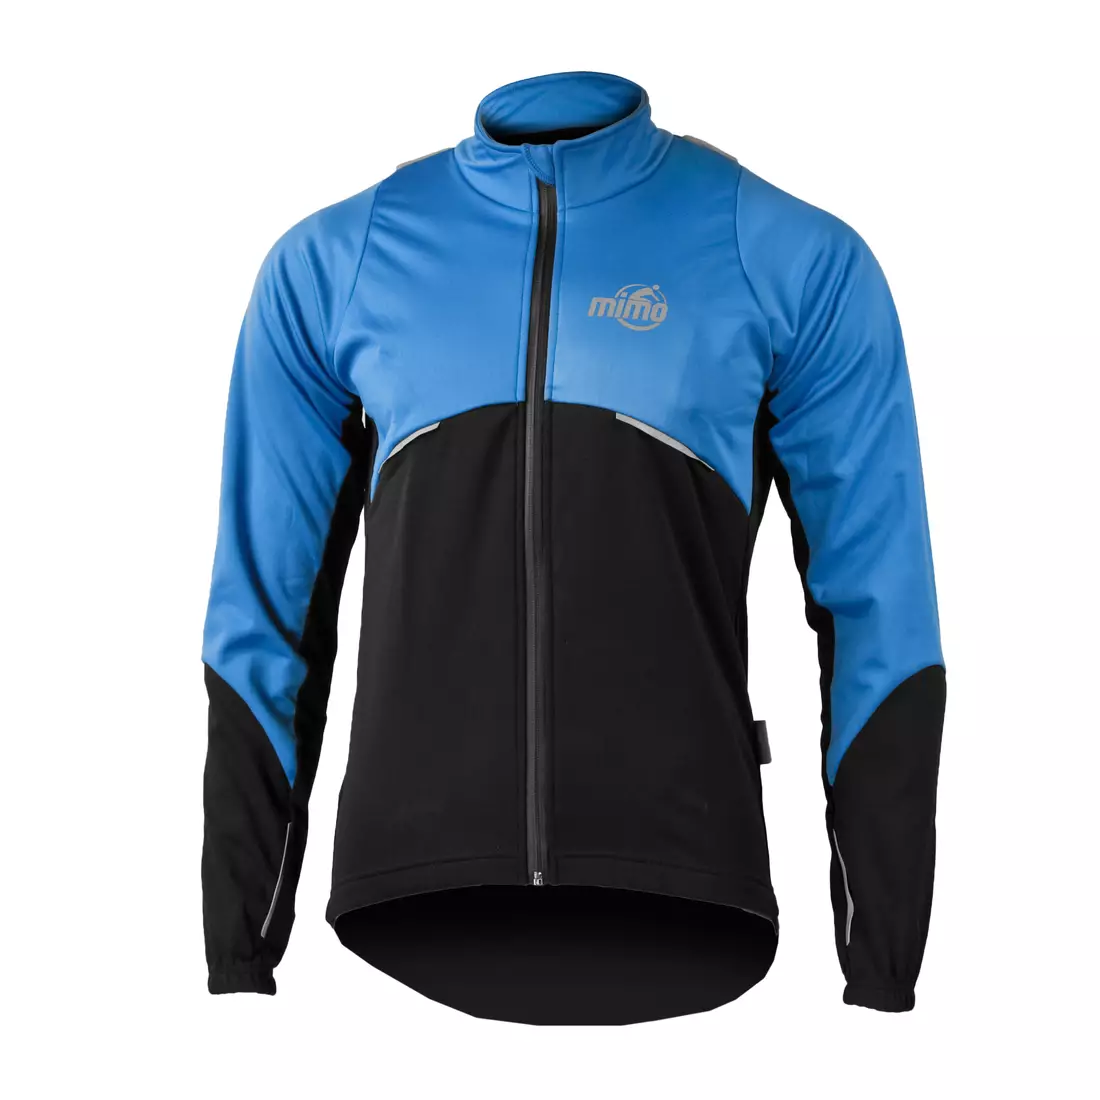 Softshellová cyklistická bunda MikeSPORT DRAGON černo-modrá